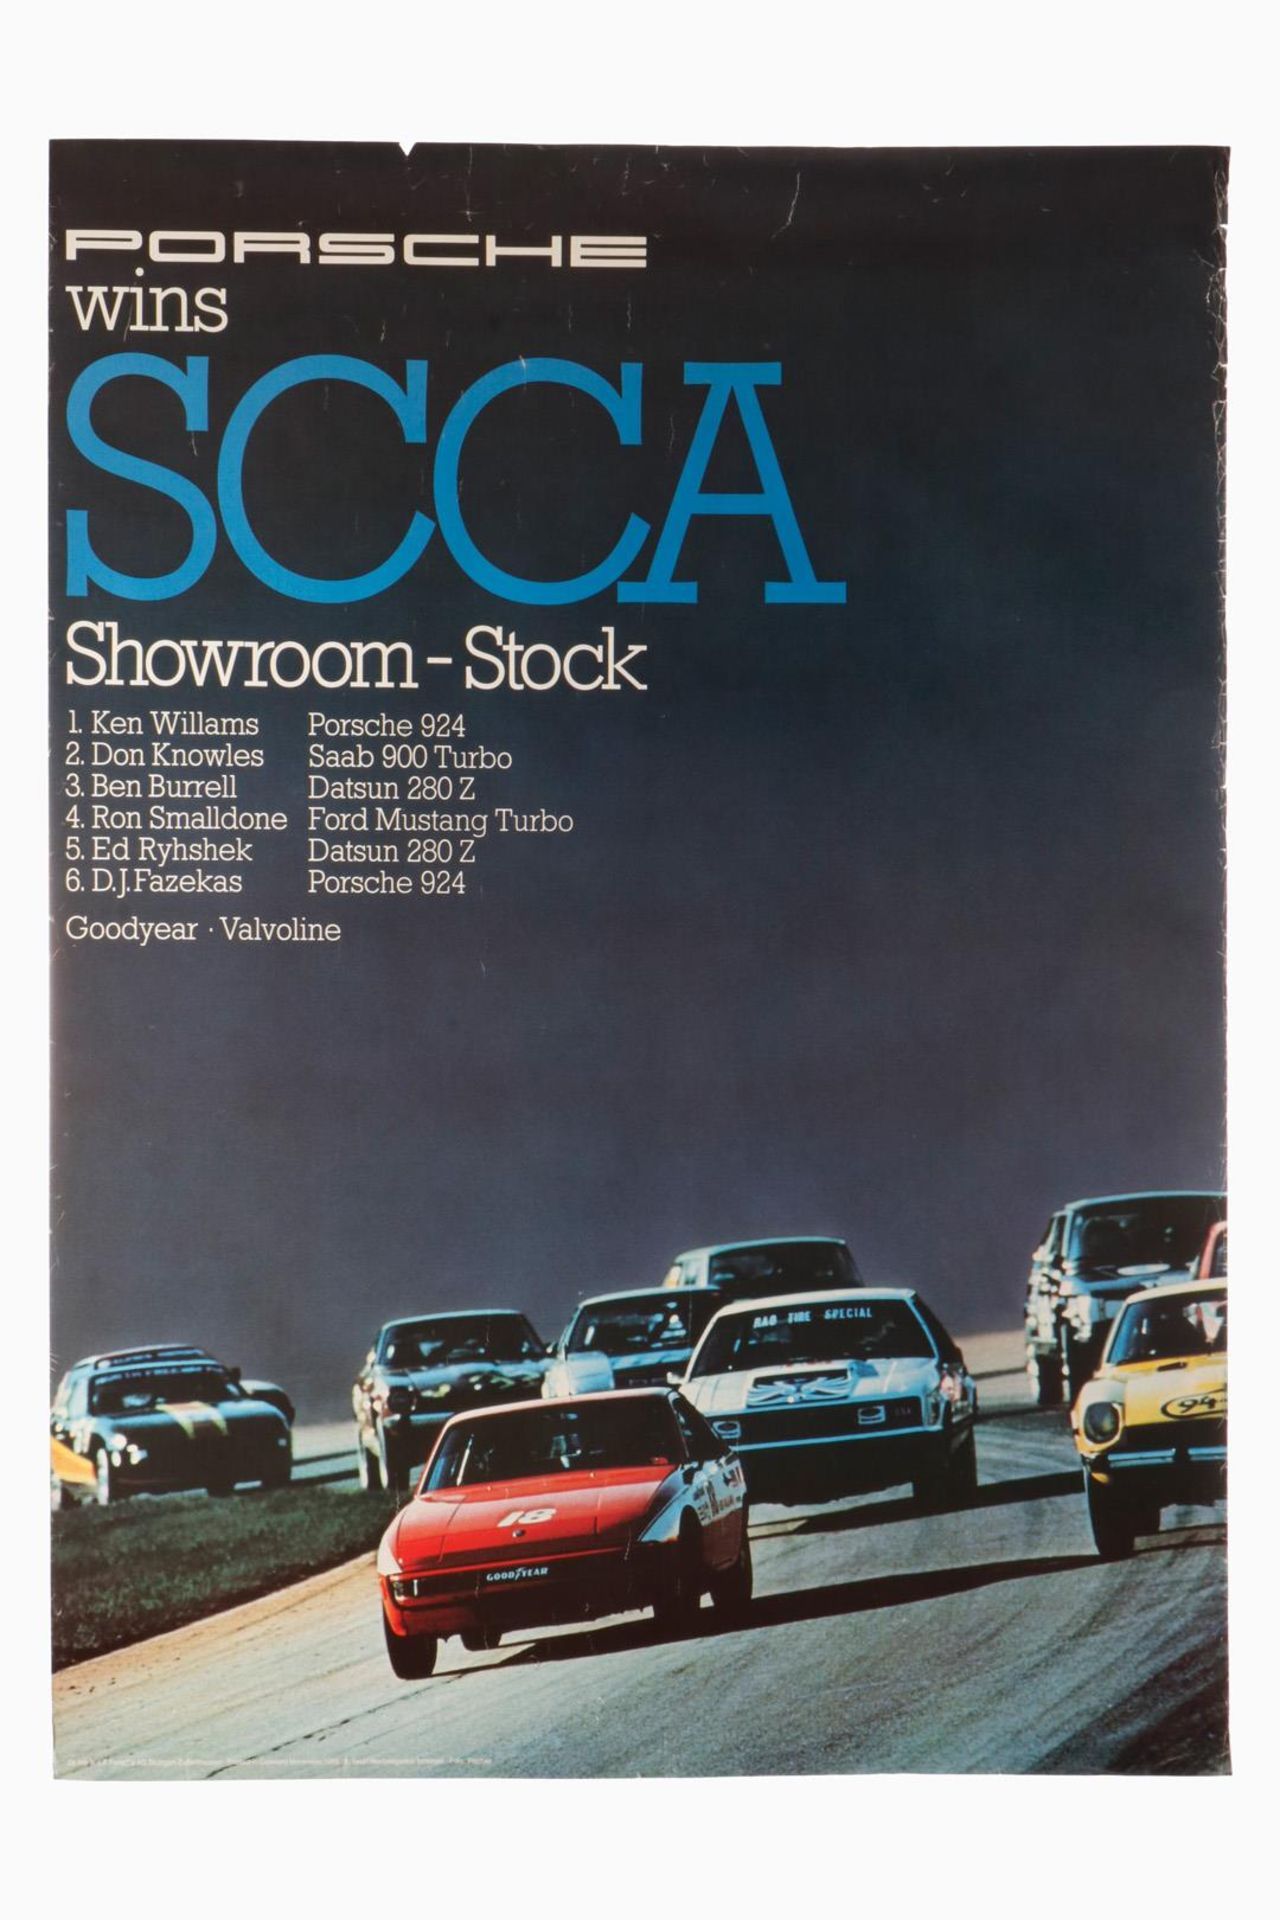 Porsche Plakat ”SCCA Showroom-Stock”, Entwurf: Strenger, L 74, H 100